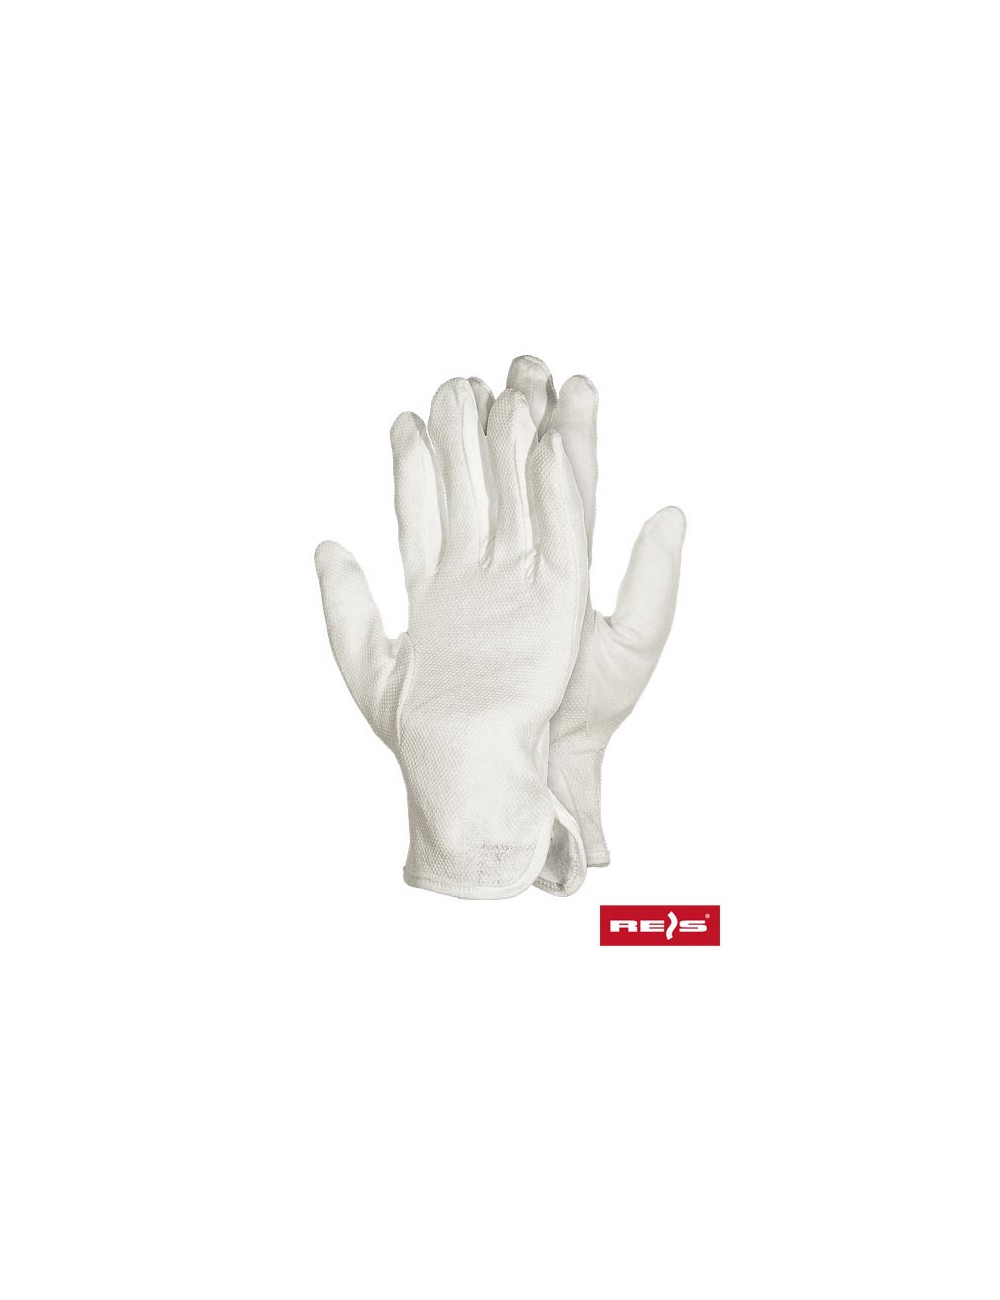 Rmicron protective gloves in white Reis